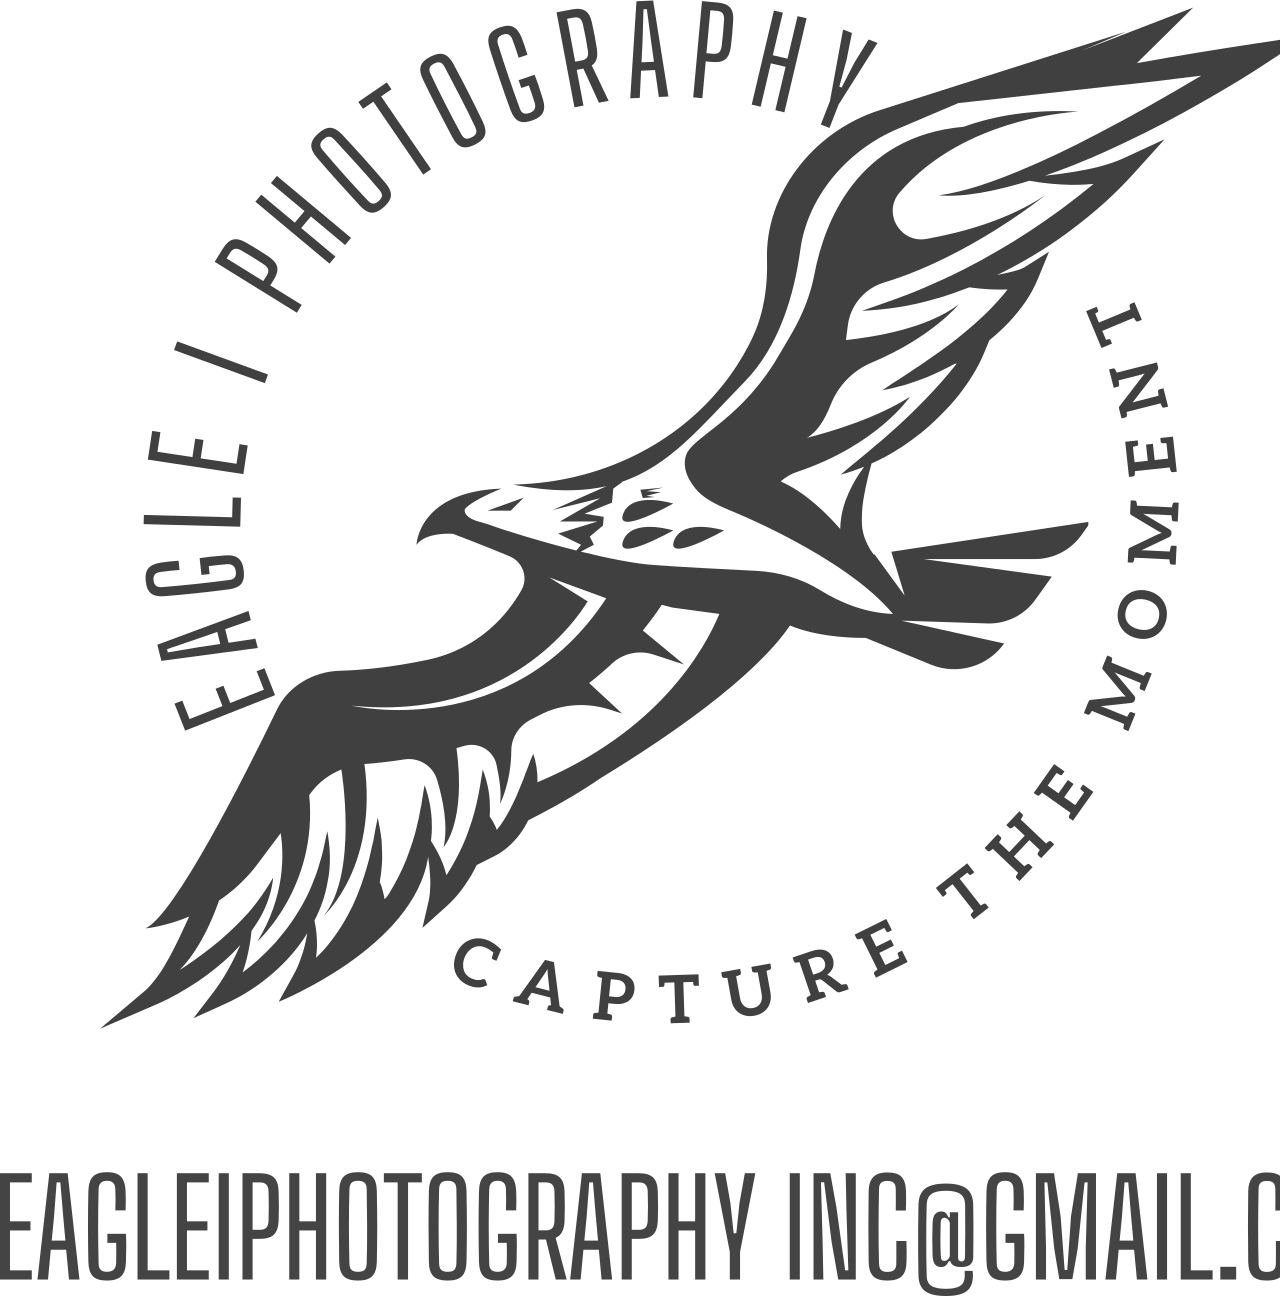 EAGLE I PHOTOGRAPHY's web page